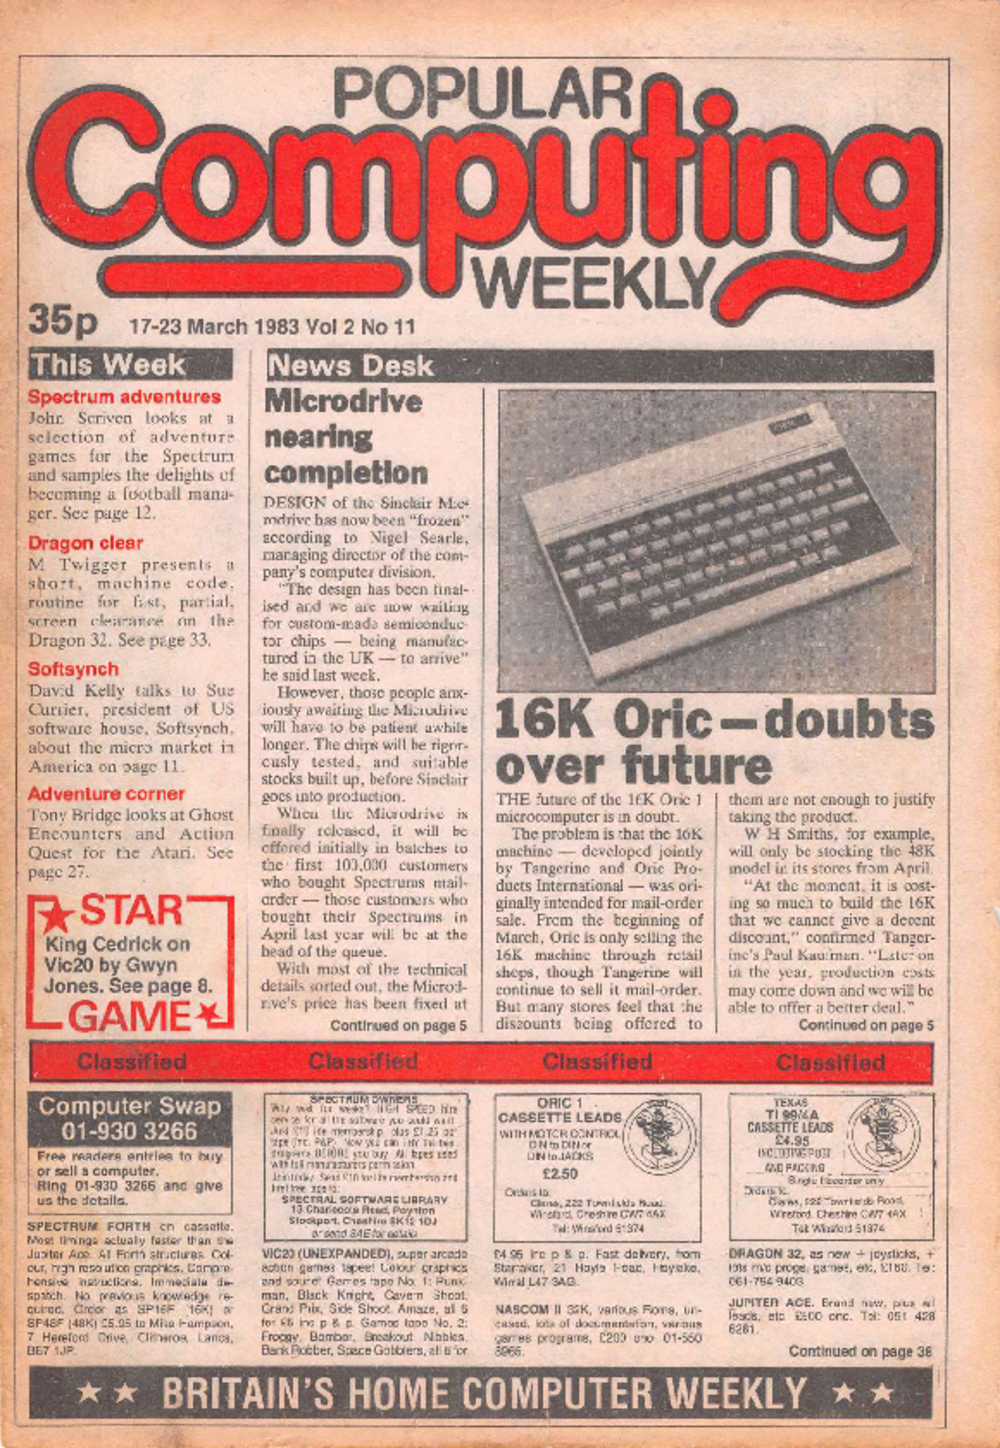 Article: Popular Computing Weekly Vol 2 No 11 - 17-23 March 1983